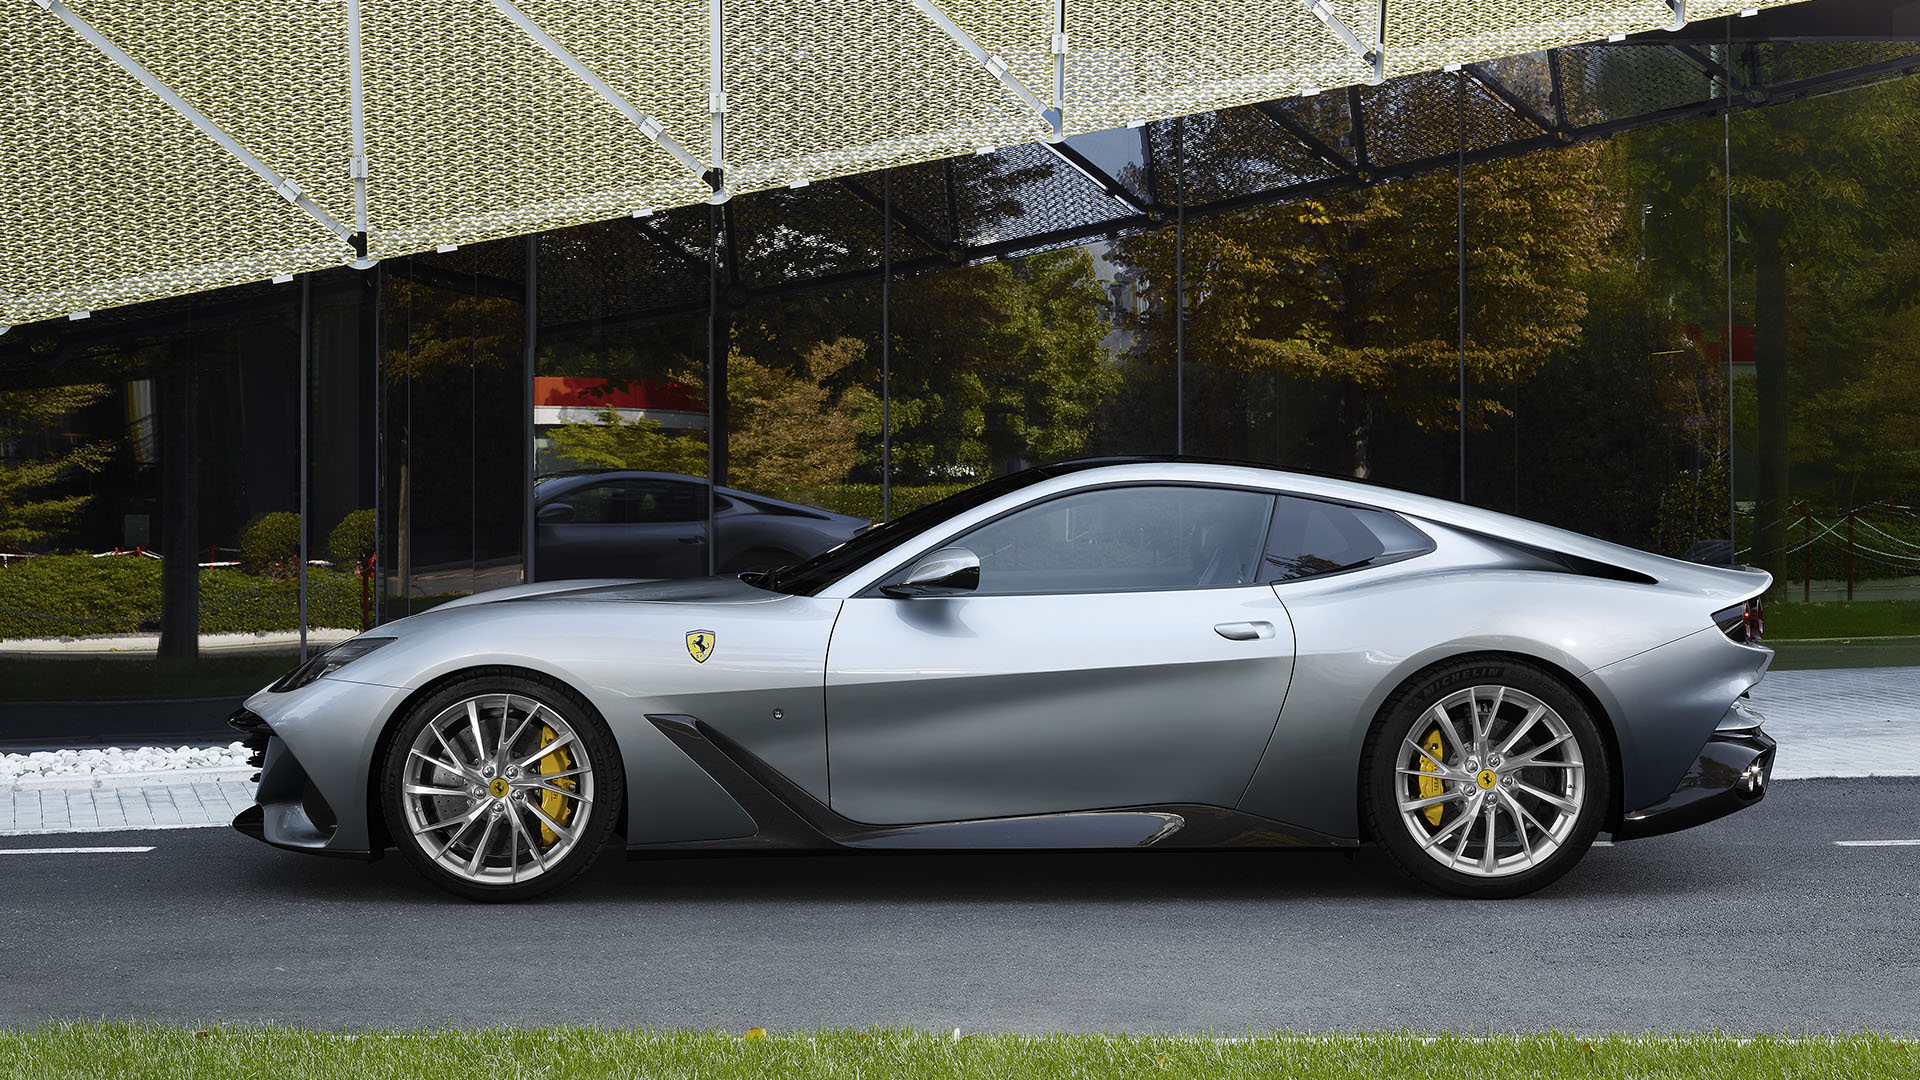 Europe: US$350,000 Ferrari F12 berlinetta already sold out! – Best